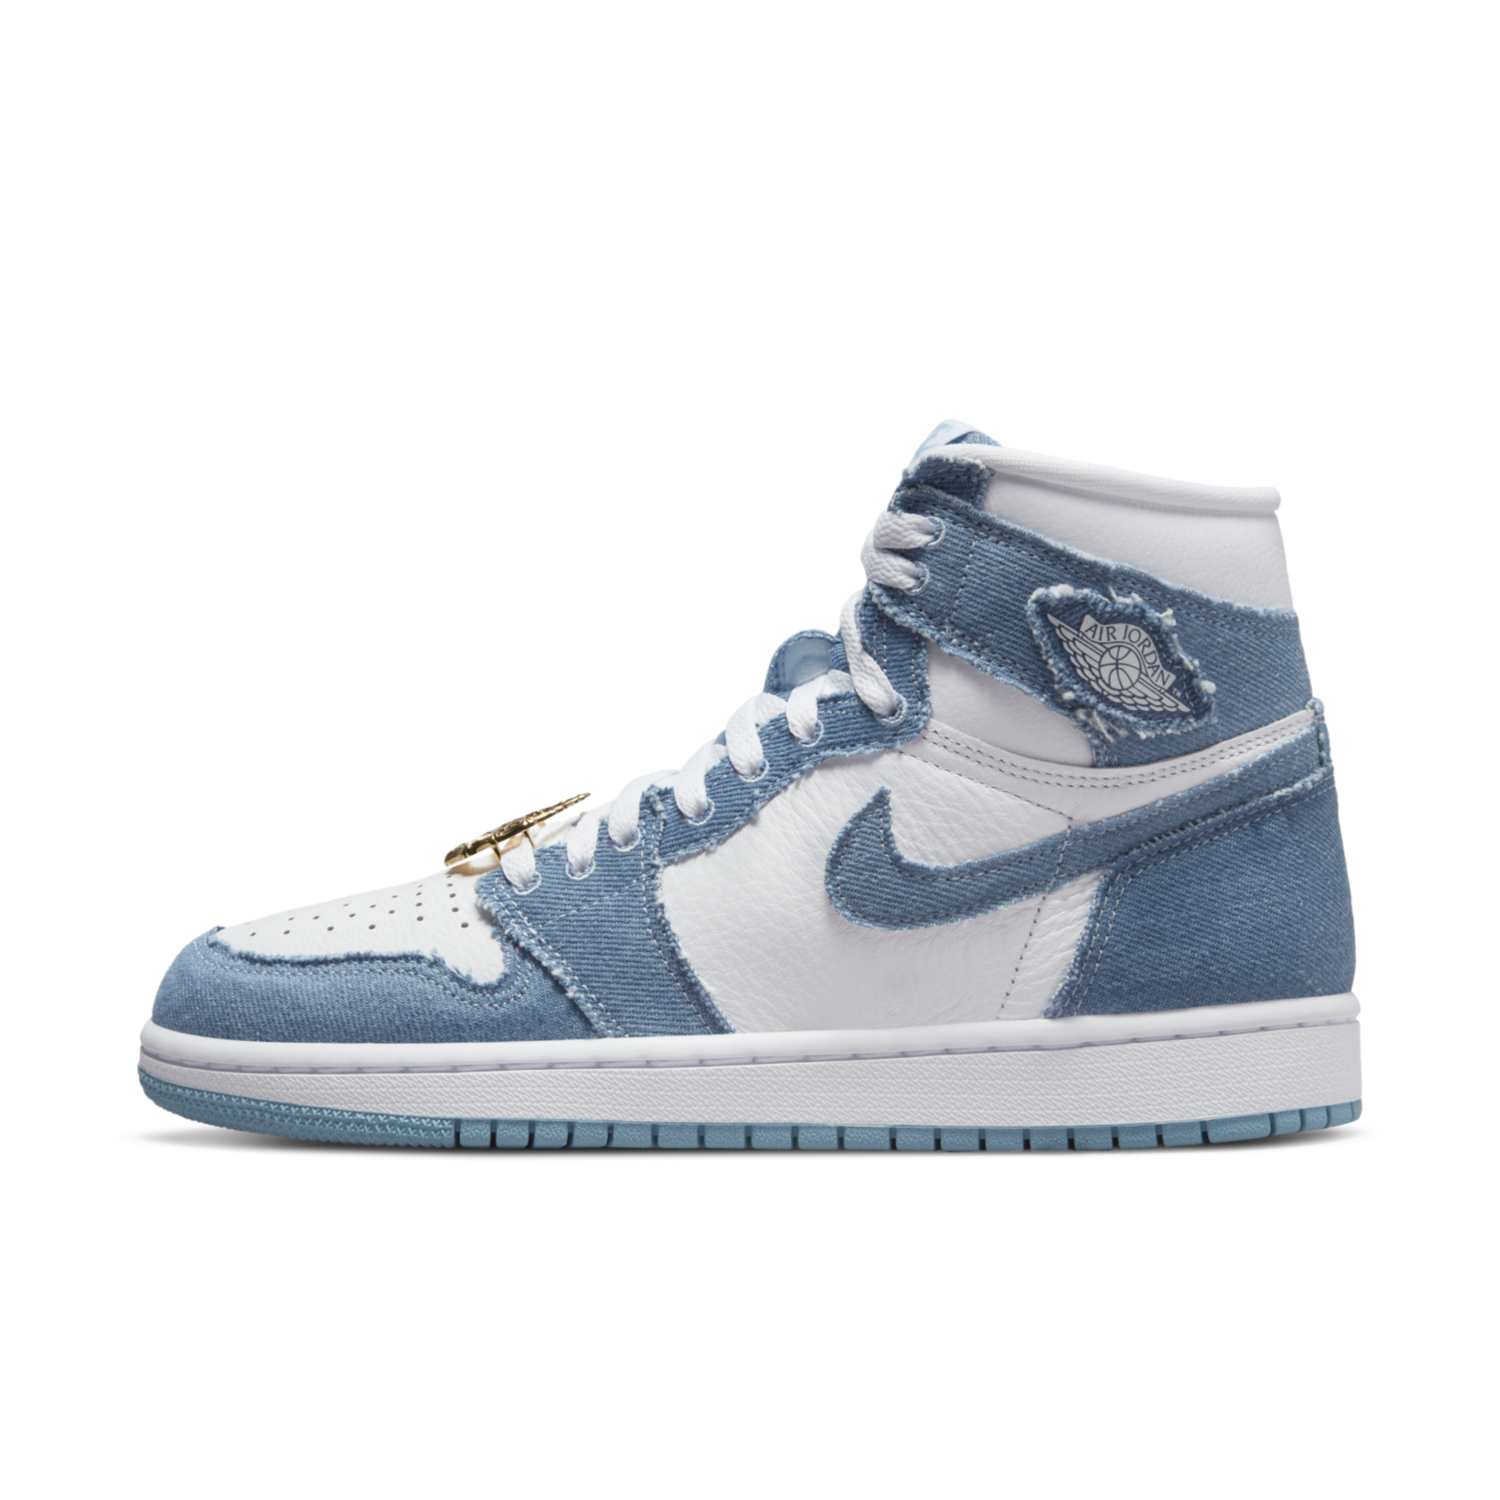 Air Jordan 1 High OG 'Denim' most wanted sneaker releases